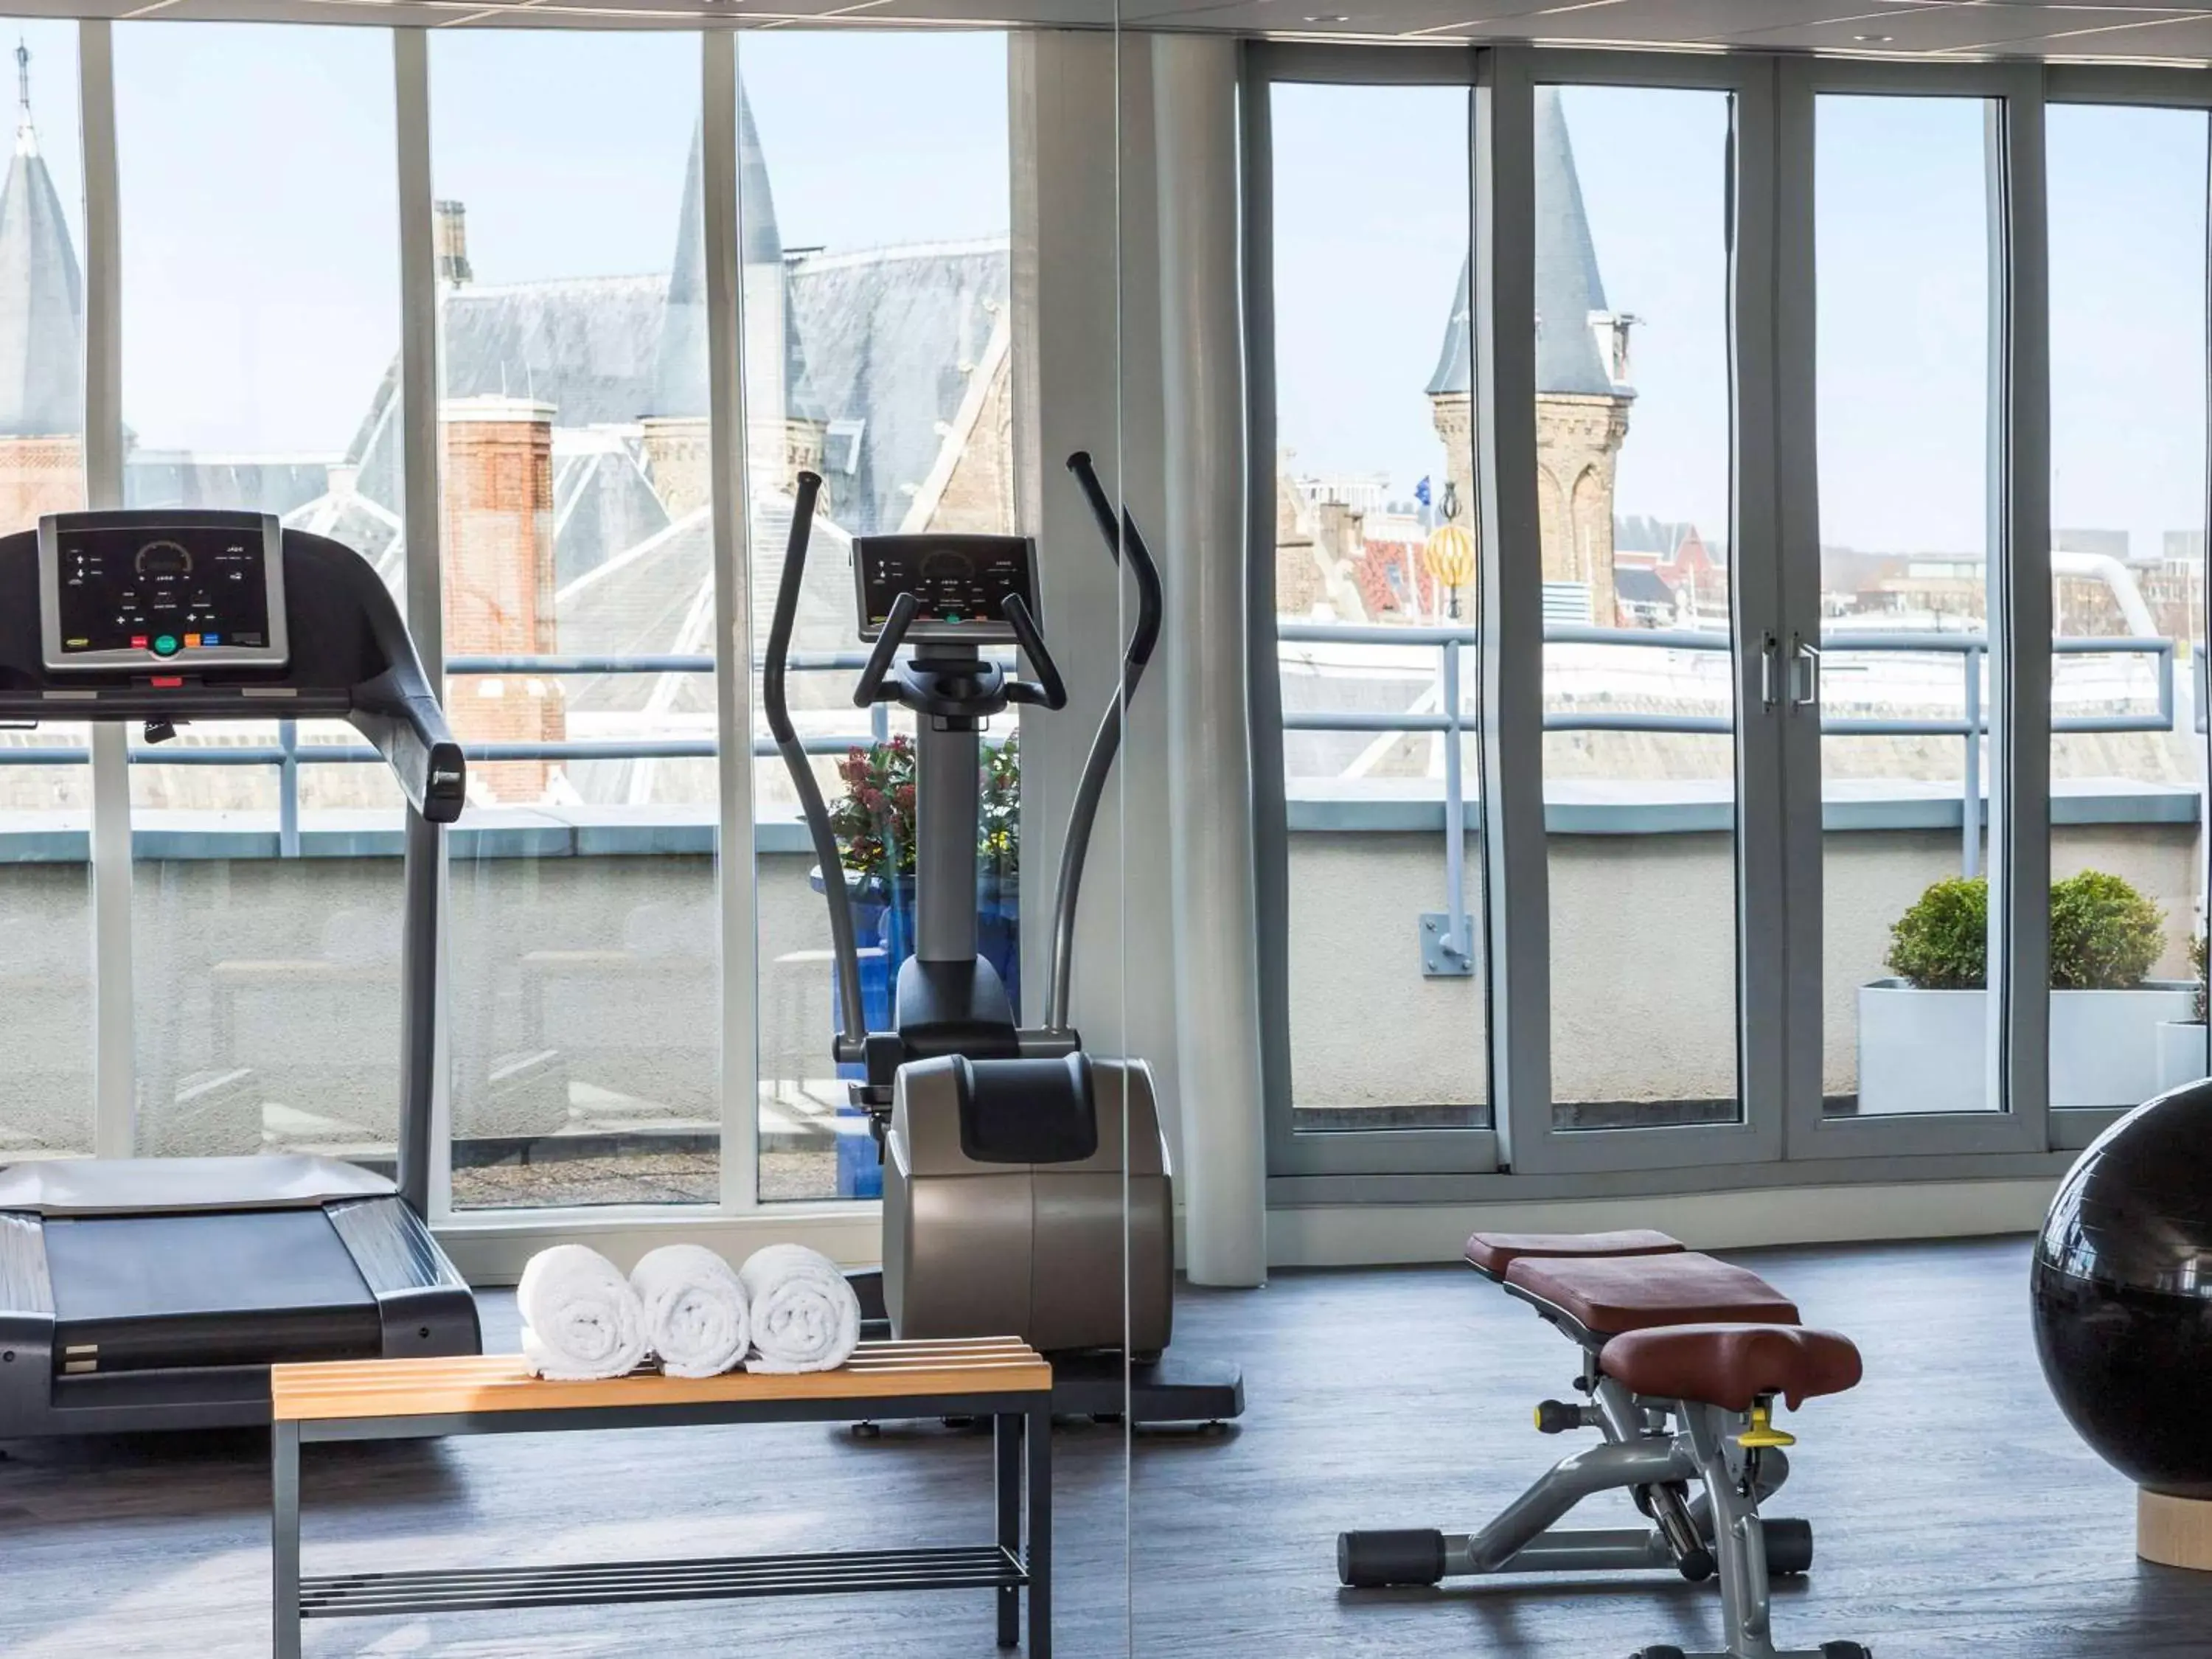 Fitness centre/facilities, Fitness Center/Facilities in Novotel Den Haag City Centre, fully renovated